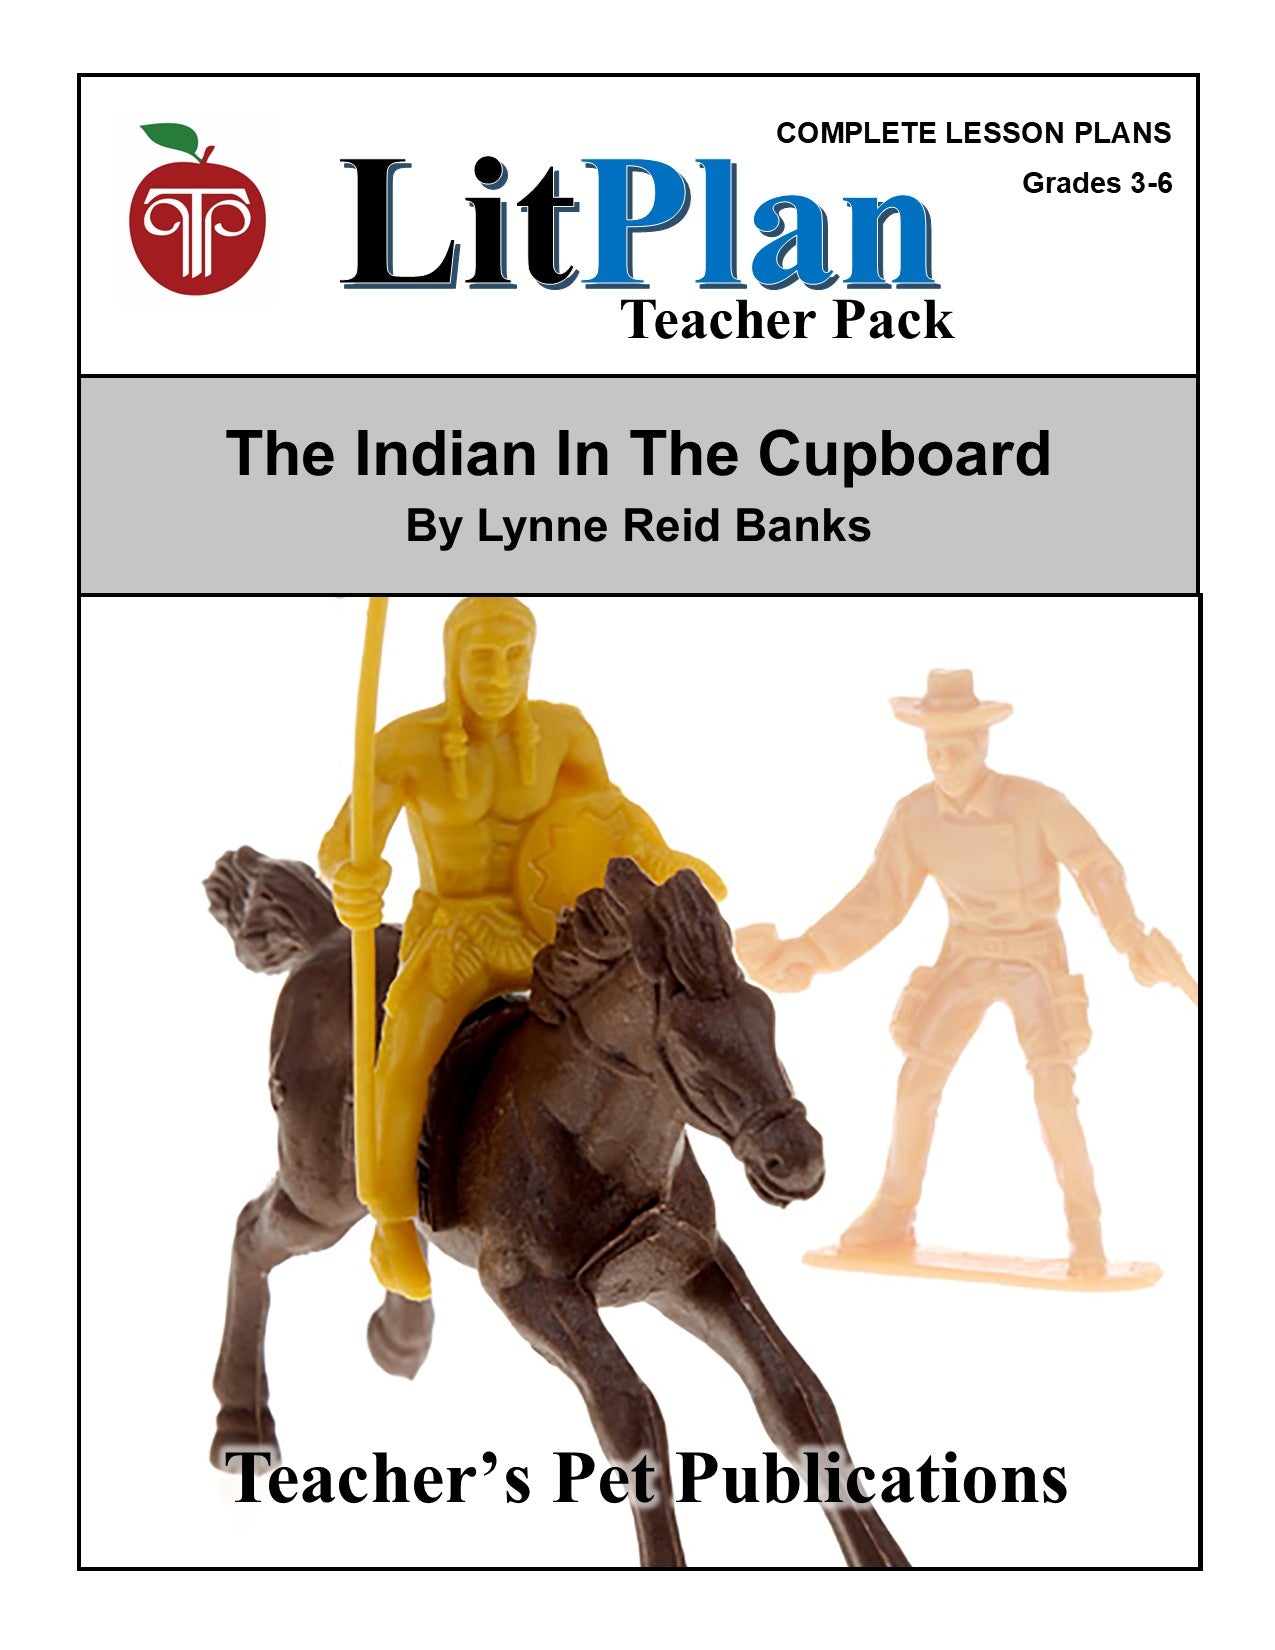 The Indian in the Cupboard: LitPlan Teacher Pack Grades 3-6